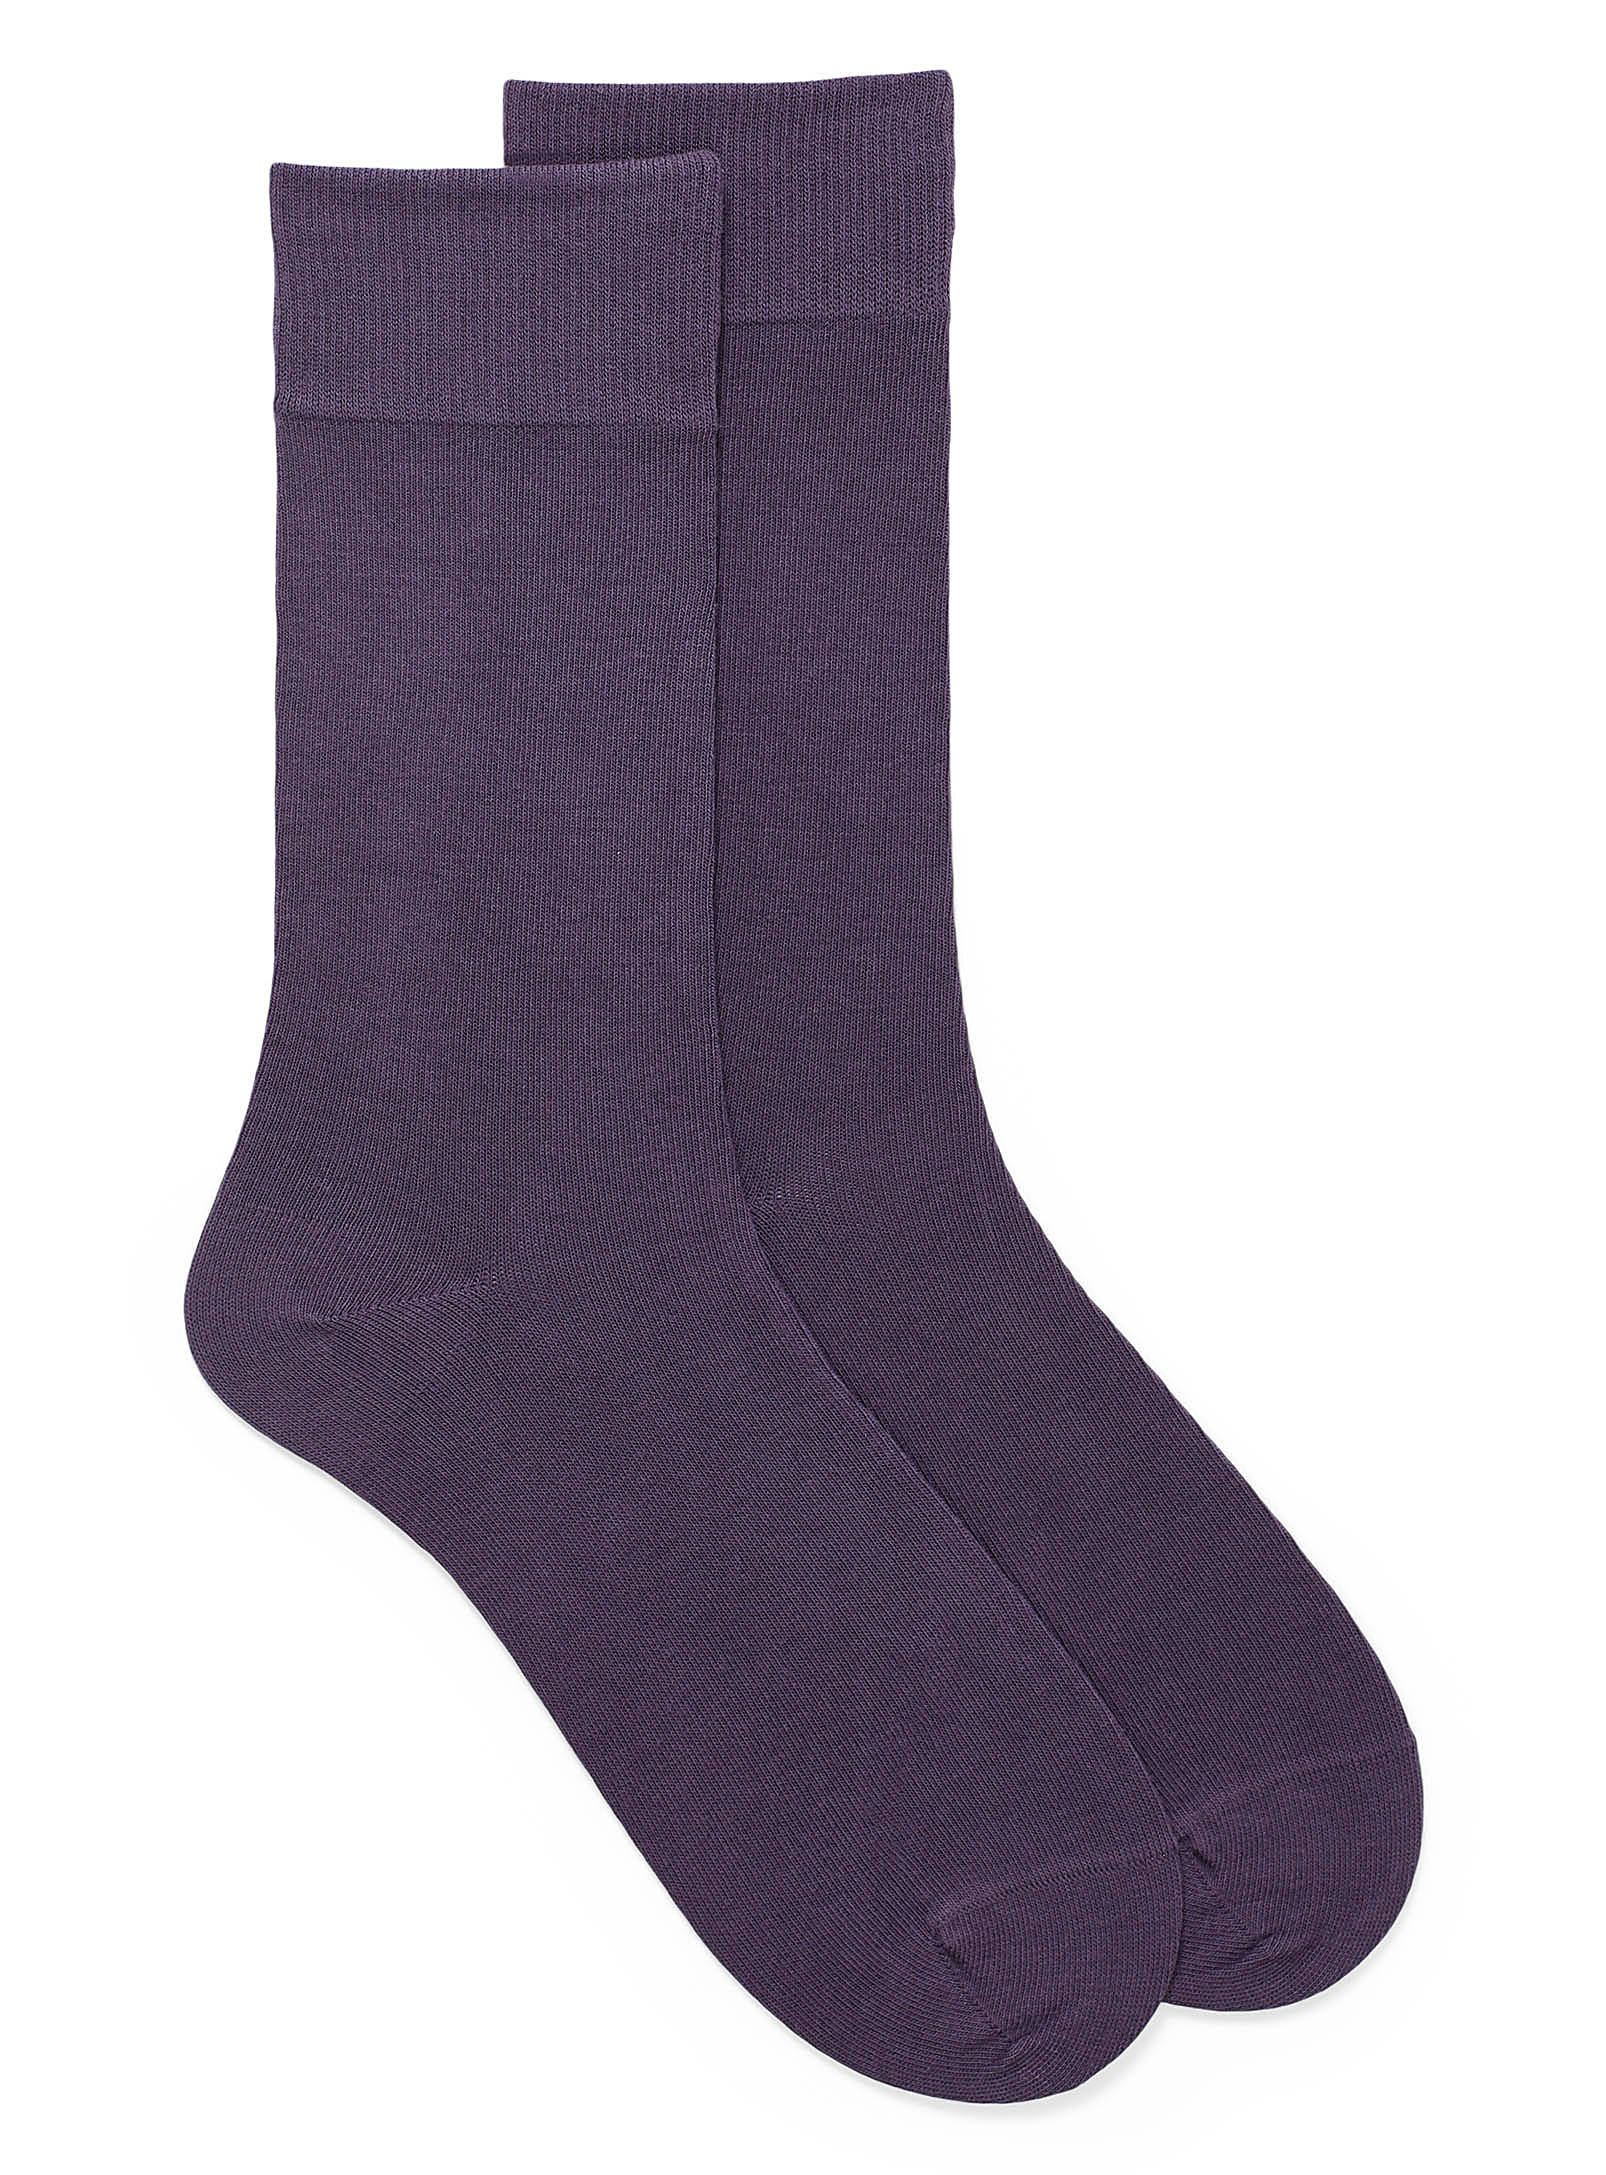 Le 31 Essential Organic Cotton Socks In Dark Crimson